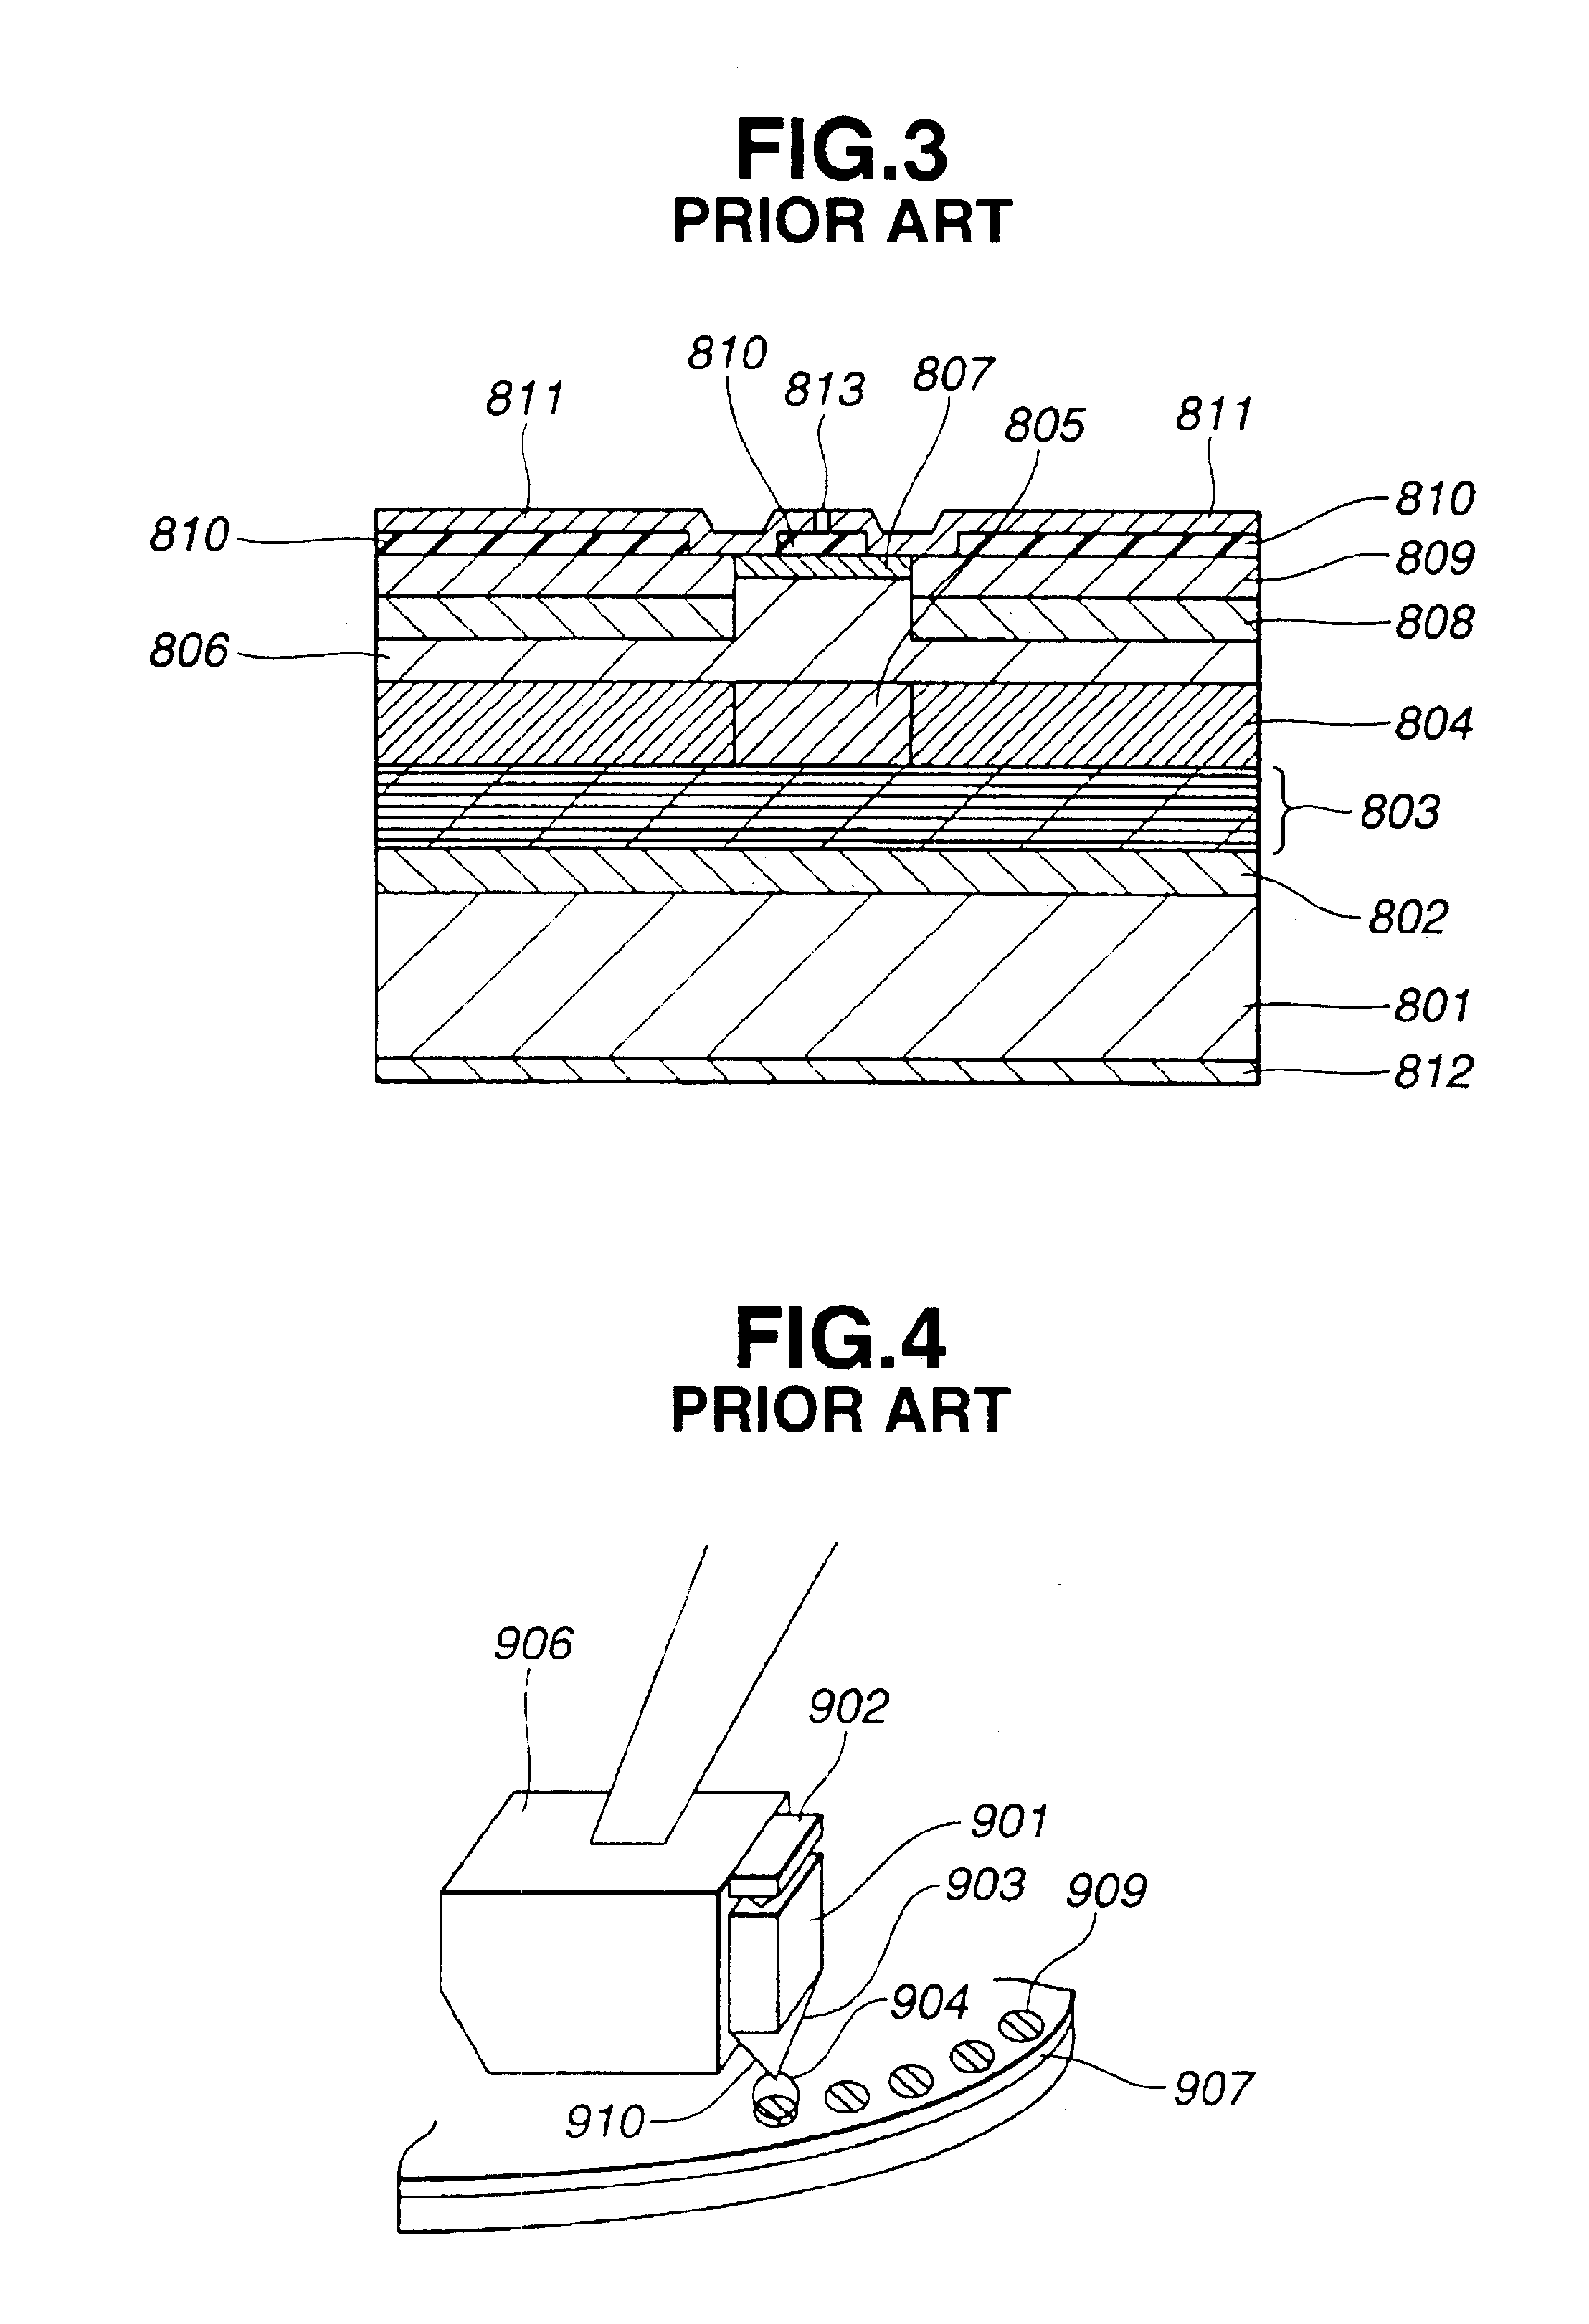 Surface-type optical apparatus